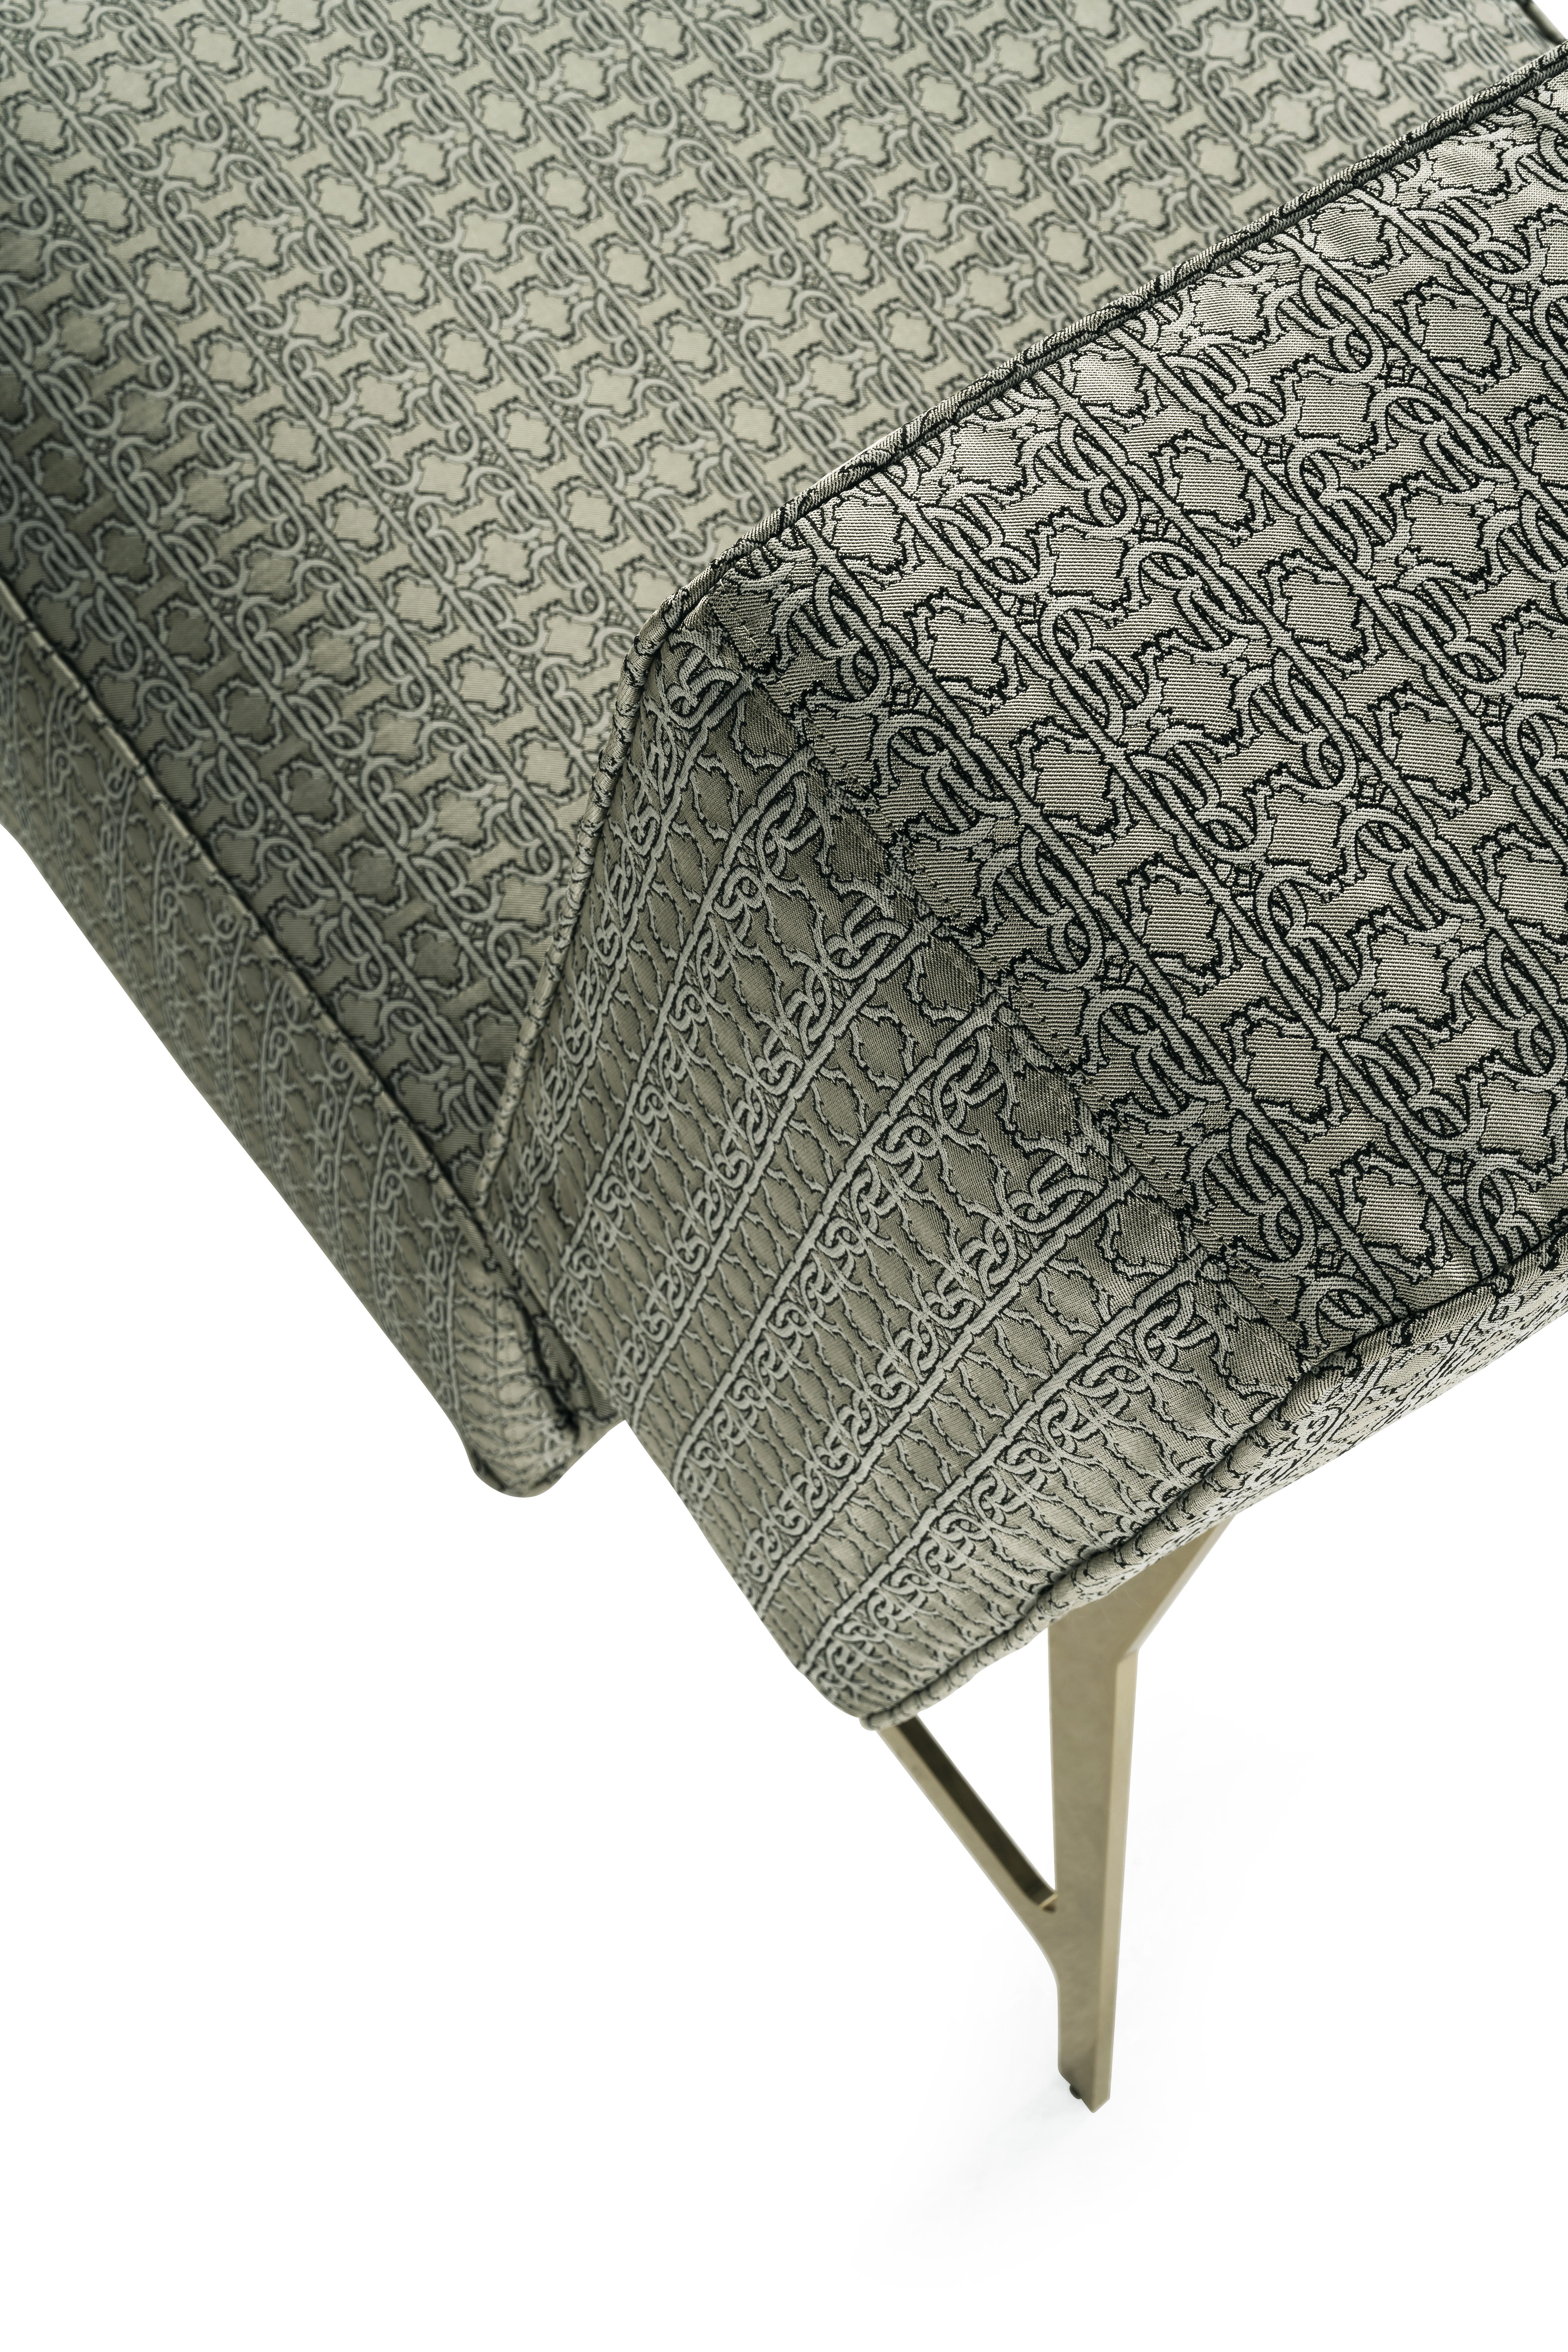 21st Century Davis Armchair in Monogram Fabric by Roberto Cavalli Home Interiors For Sale 1